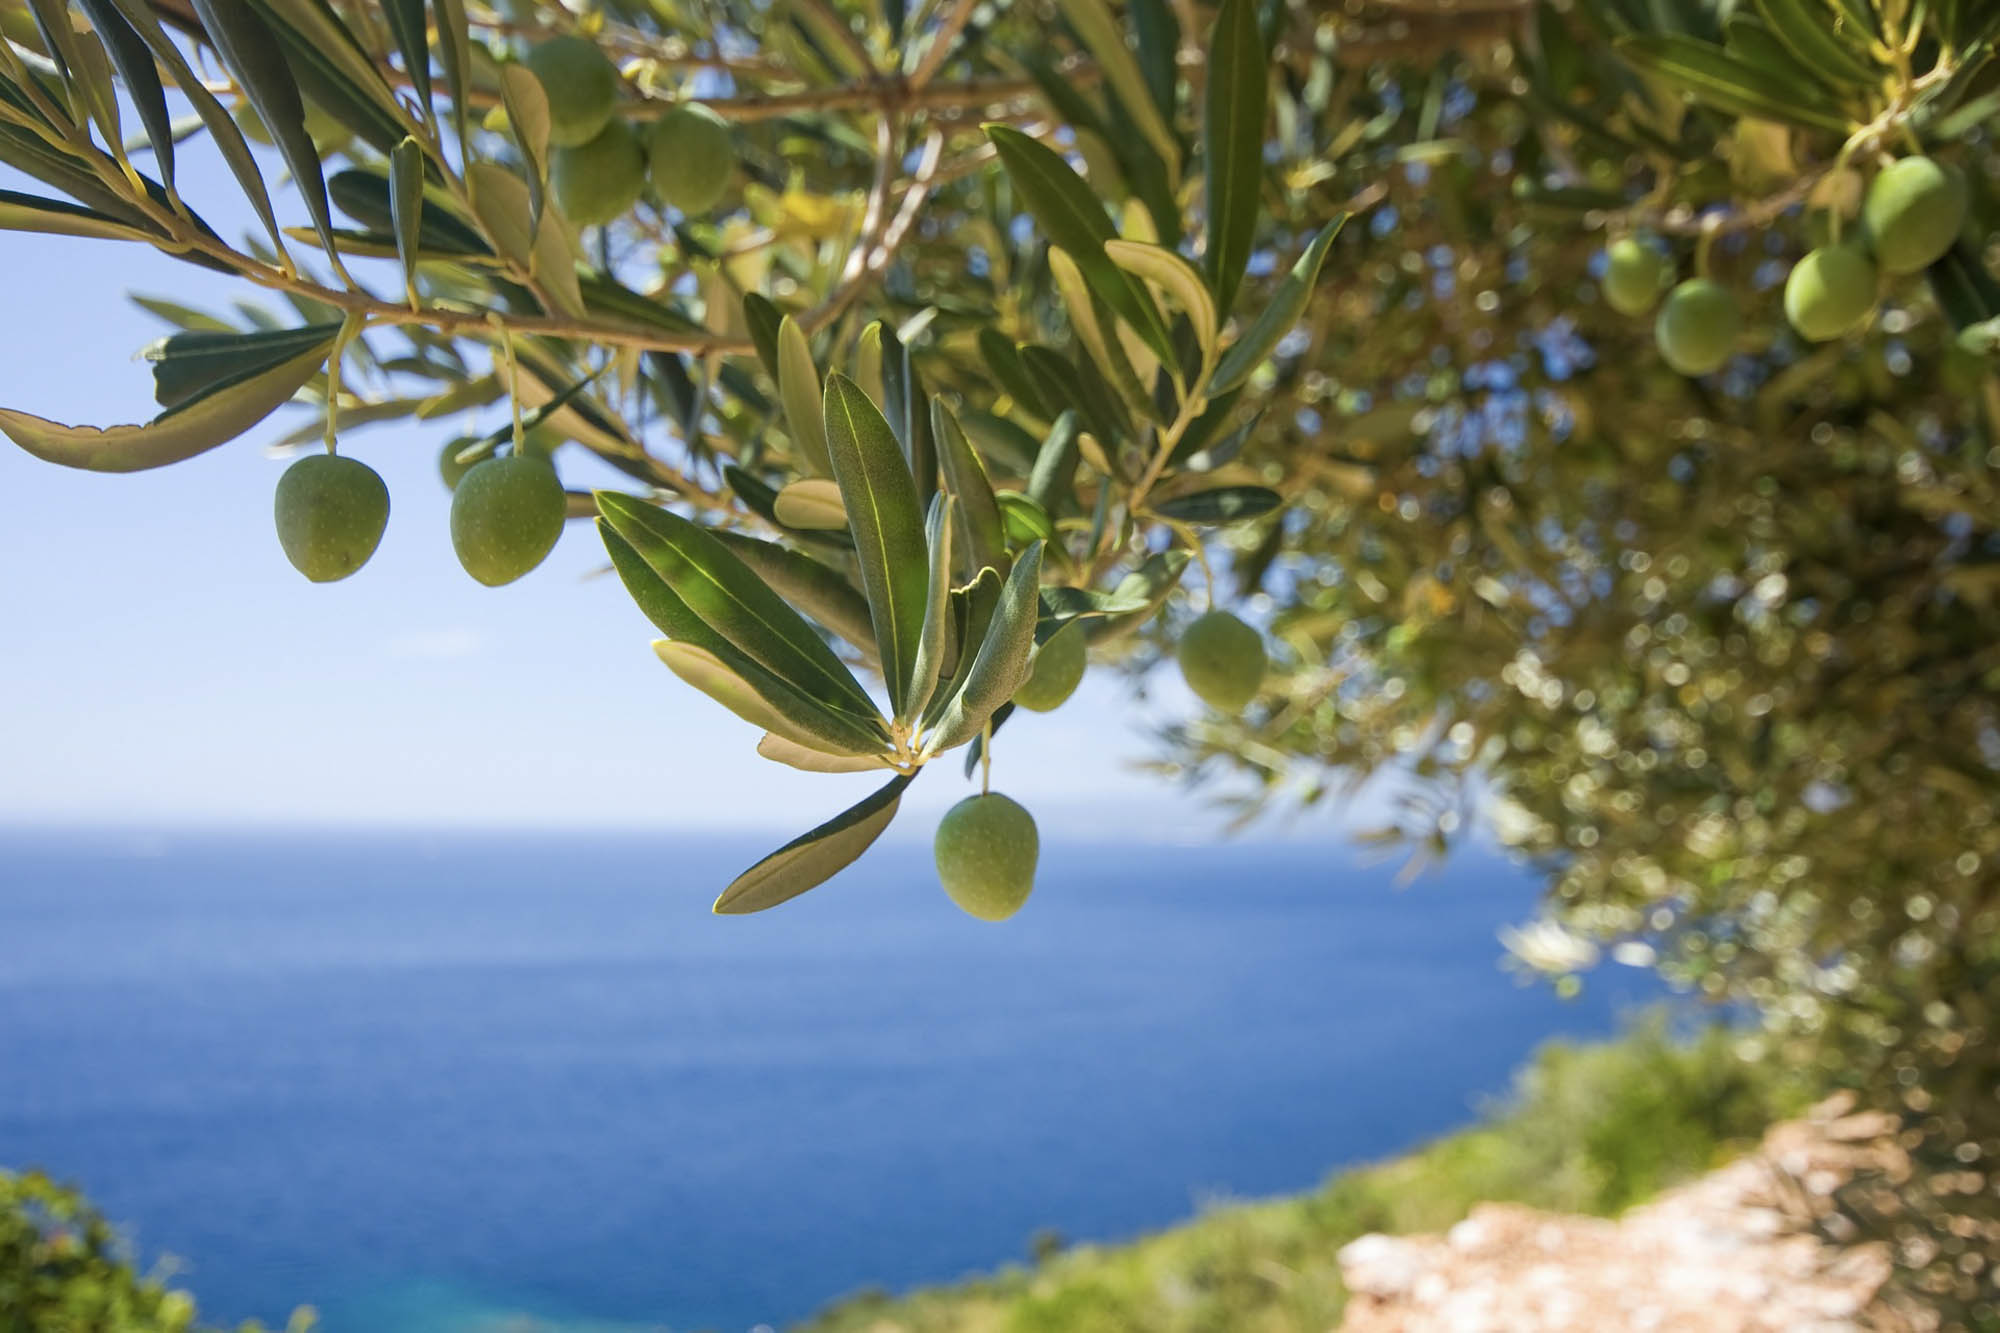 drzewo oliwne a w tle morze, detal